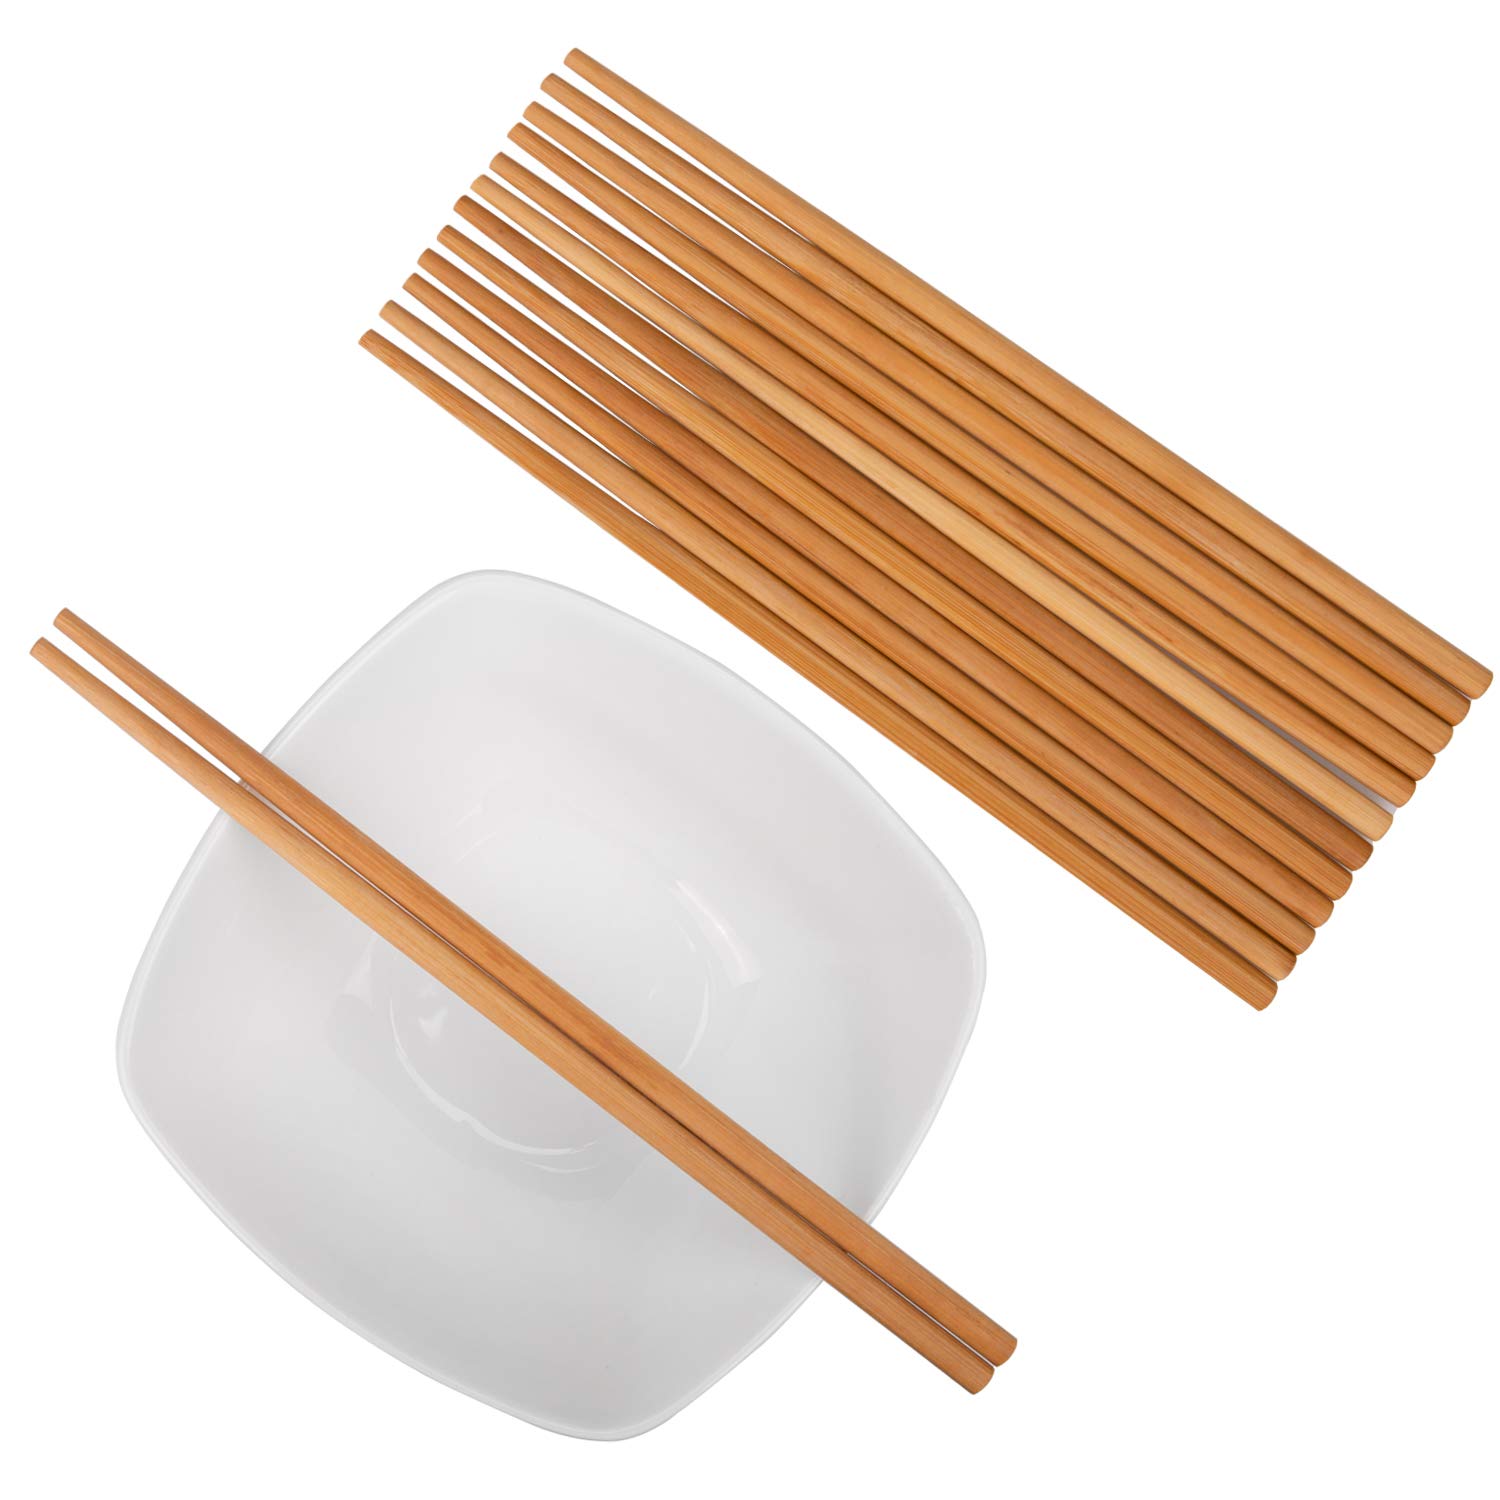 Jucoan 100 Pairs Reusable Bamboo Chopsticks Set, 9.5 Inches Long Natural Healthy Bamboo Chopsticks, Lightweight Wooden Chopsticks for Noodles, Sushi, Home, Party, Restaurant